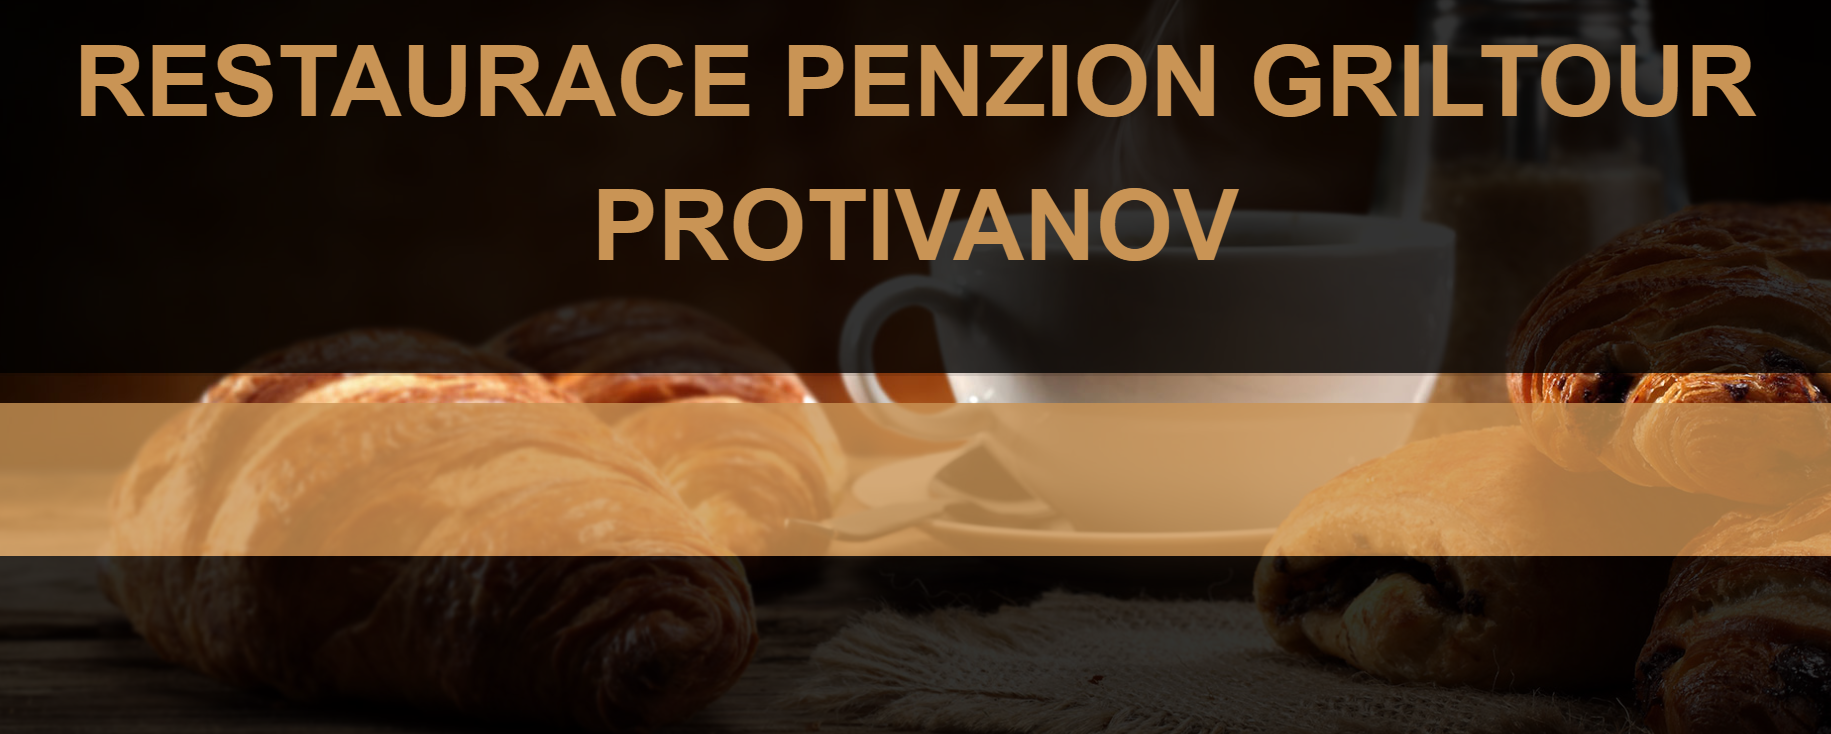 PENZION A RESTAURACE GRILTOUR, Protivanov